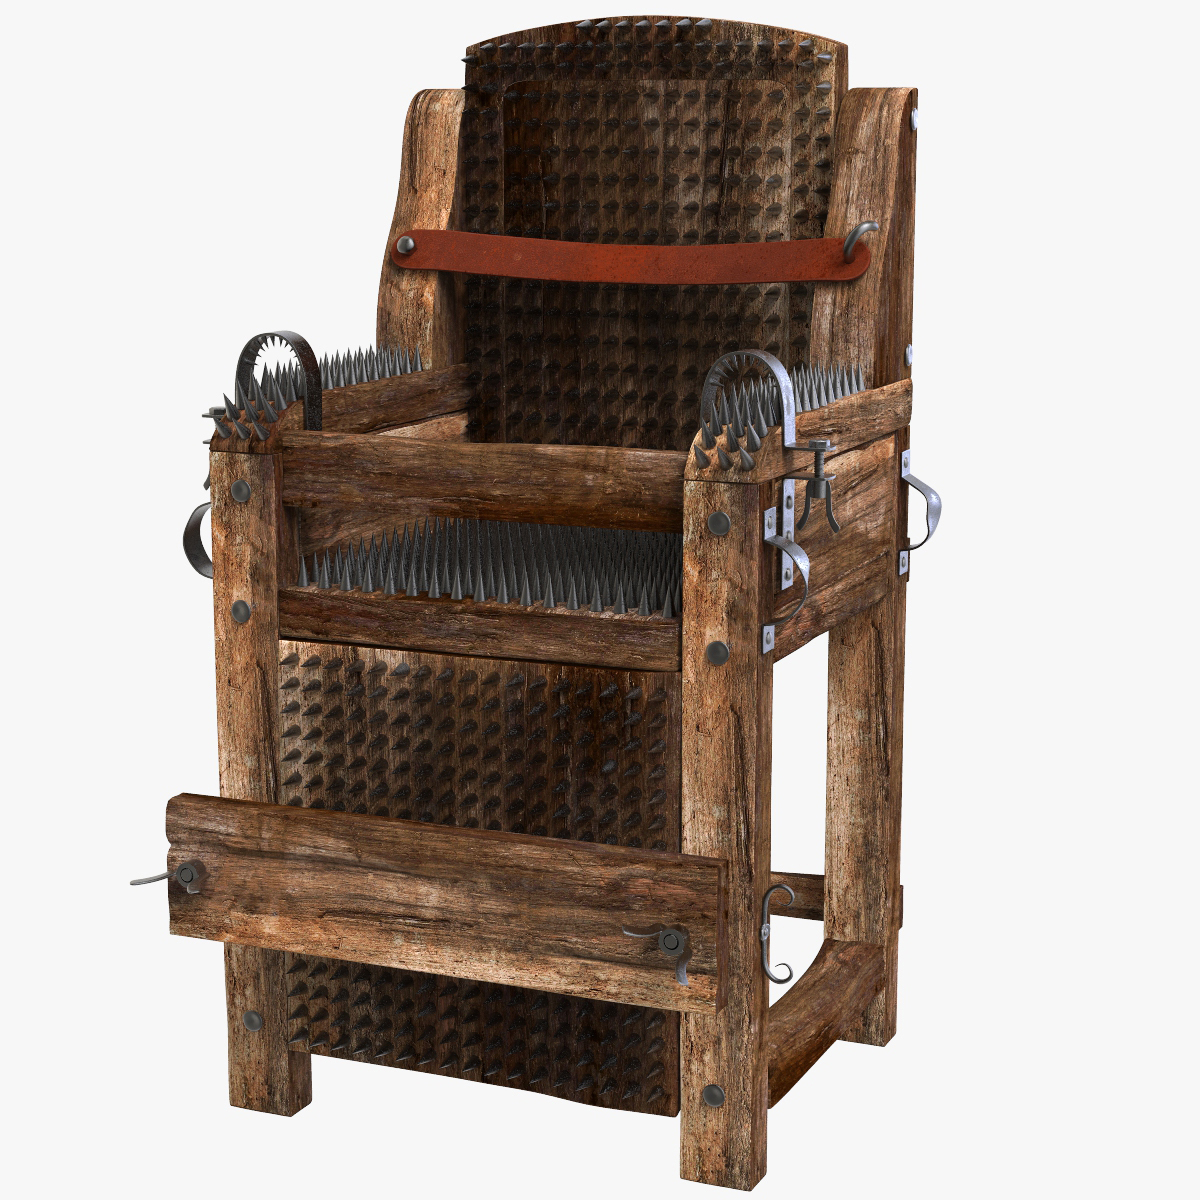 Torture Iron Chair 3d Model Turbosquid 1438709